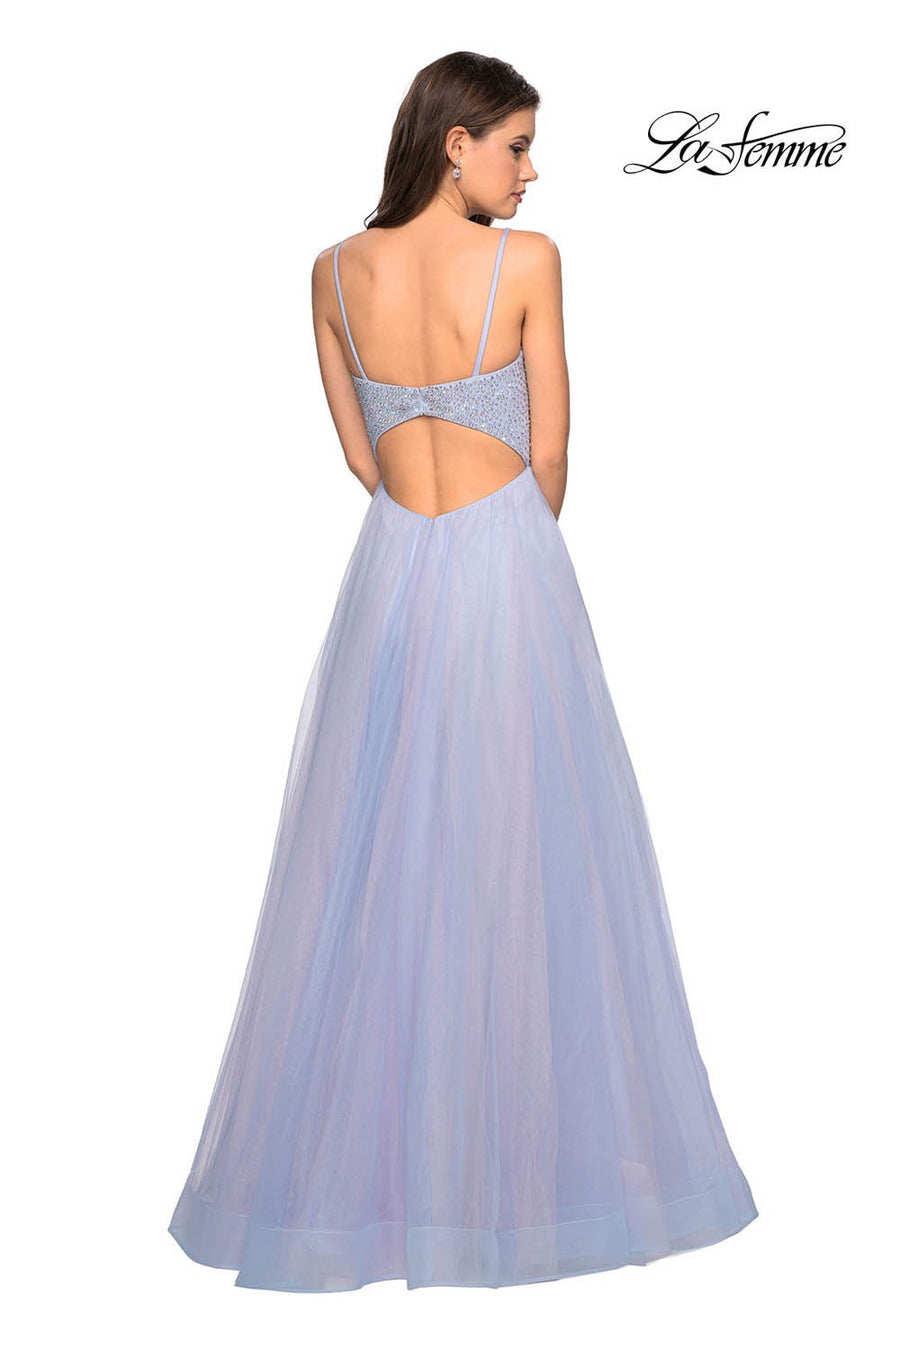 La Femme 27636 prom dress images.  La Femme 27636 is available in these colors: Blue Pink, Mauve.